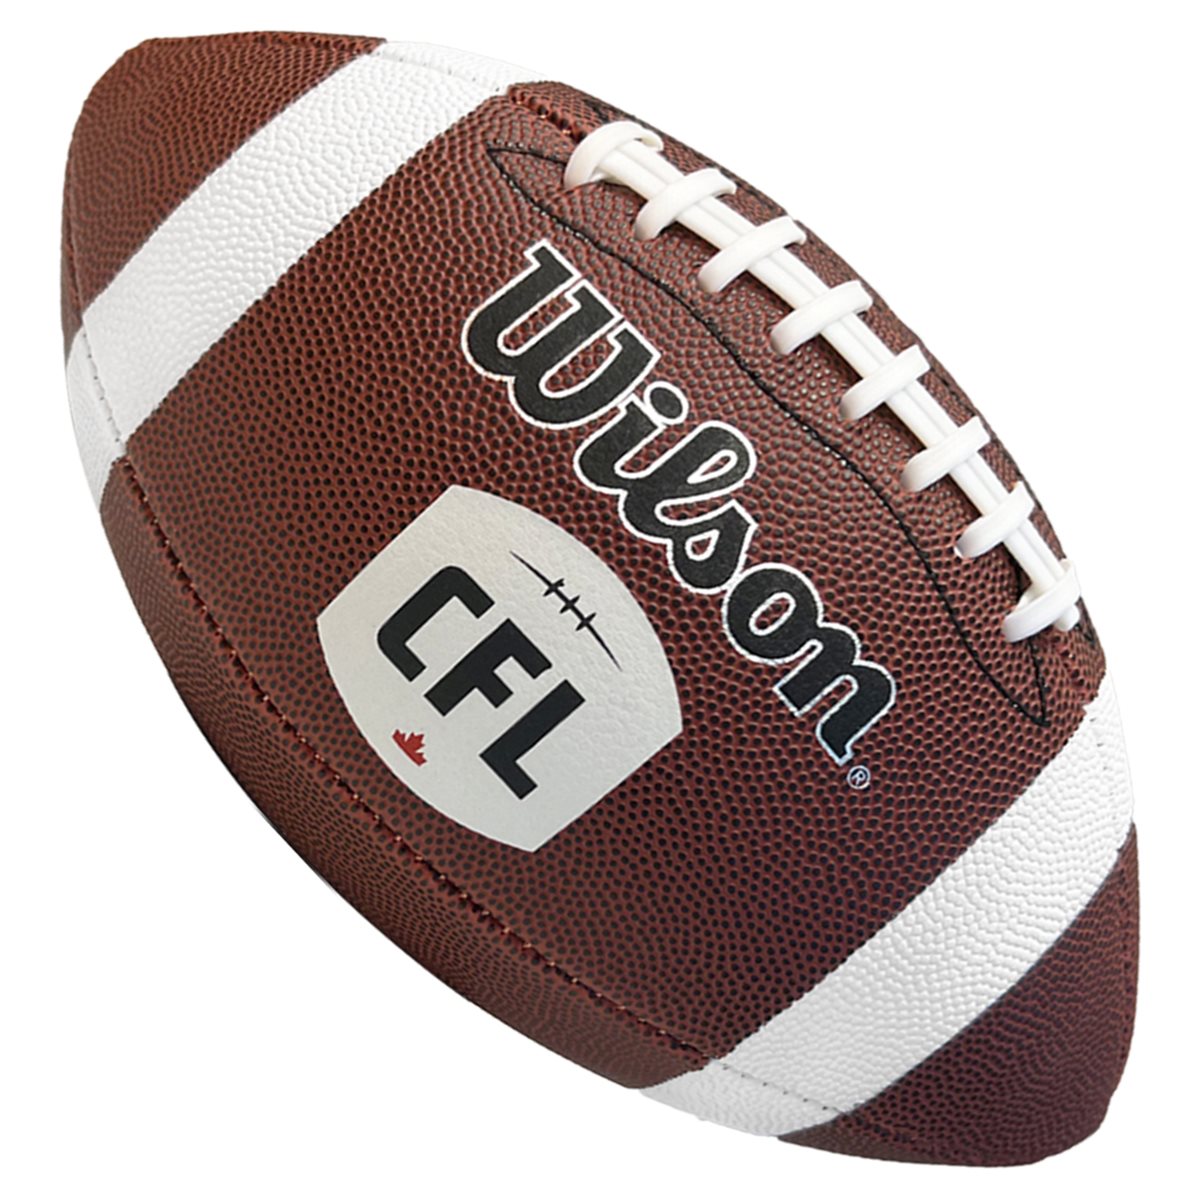 Ballon de football en caoutchouc imperméable Wilson LCF MVP, taille  officielle, brun